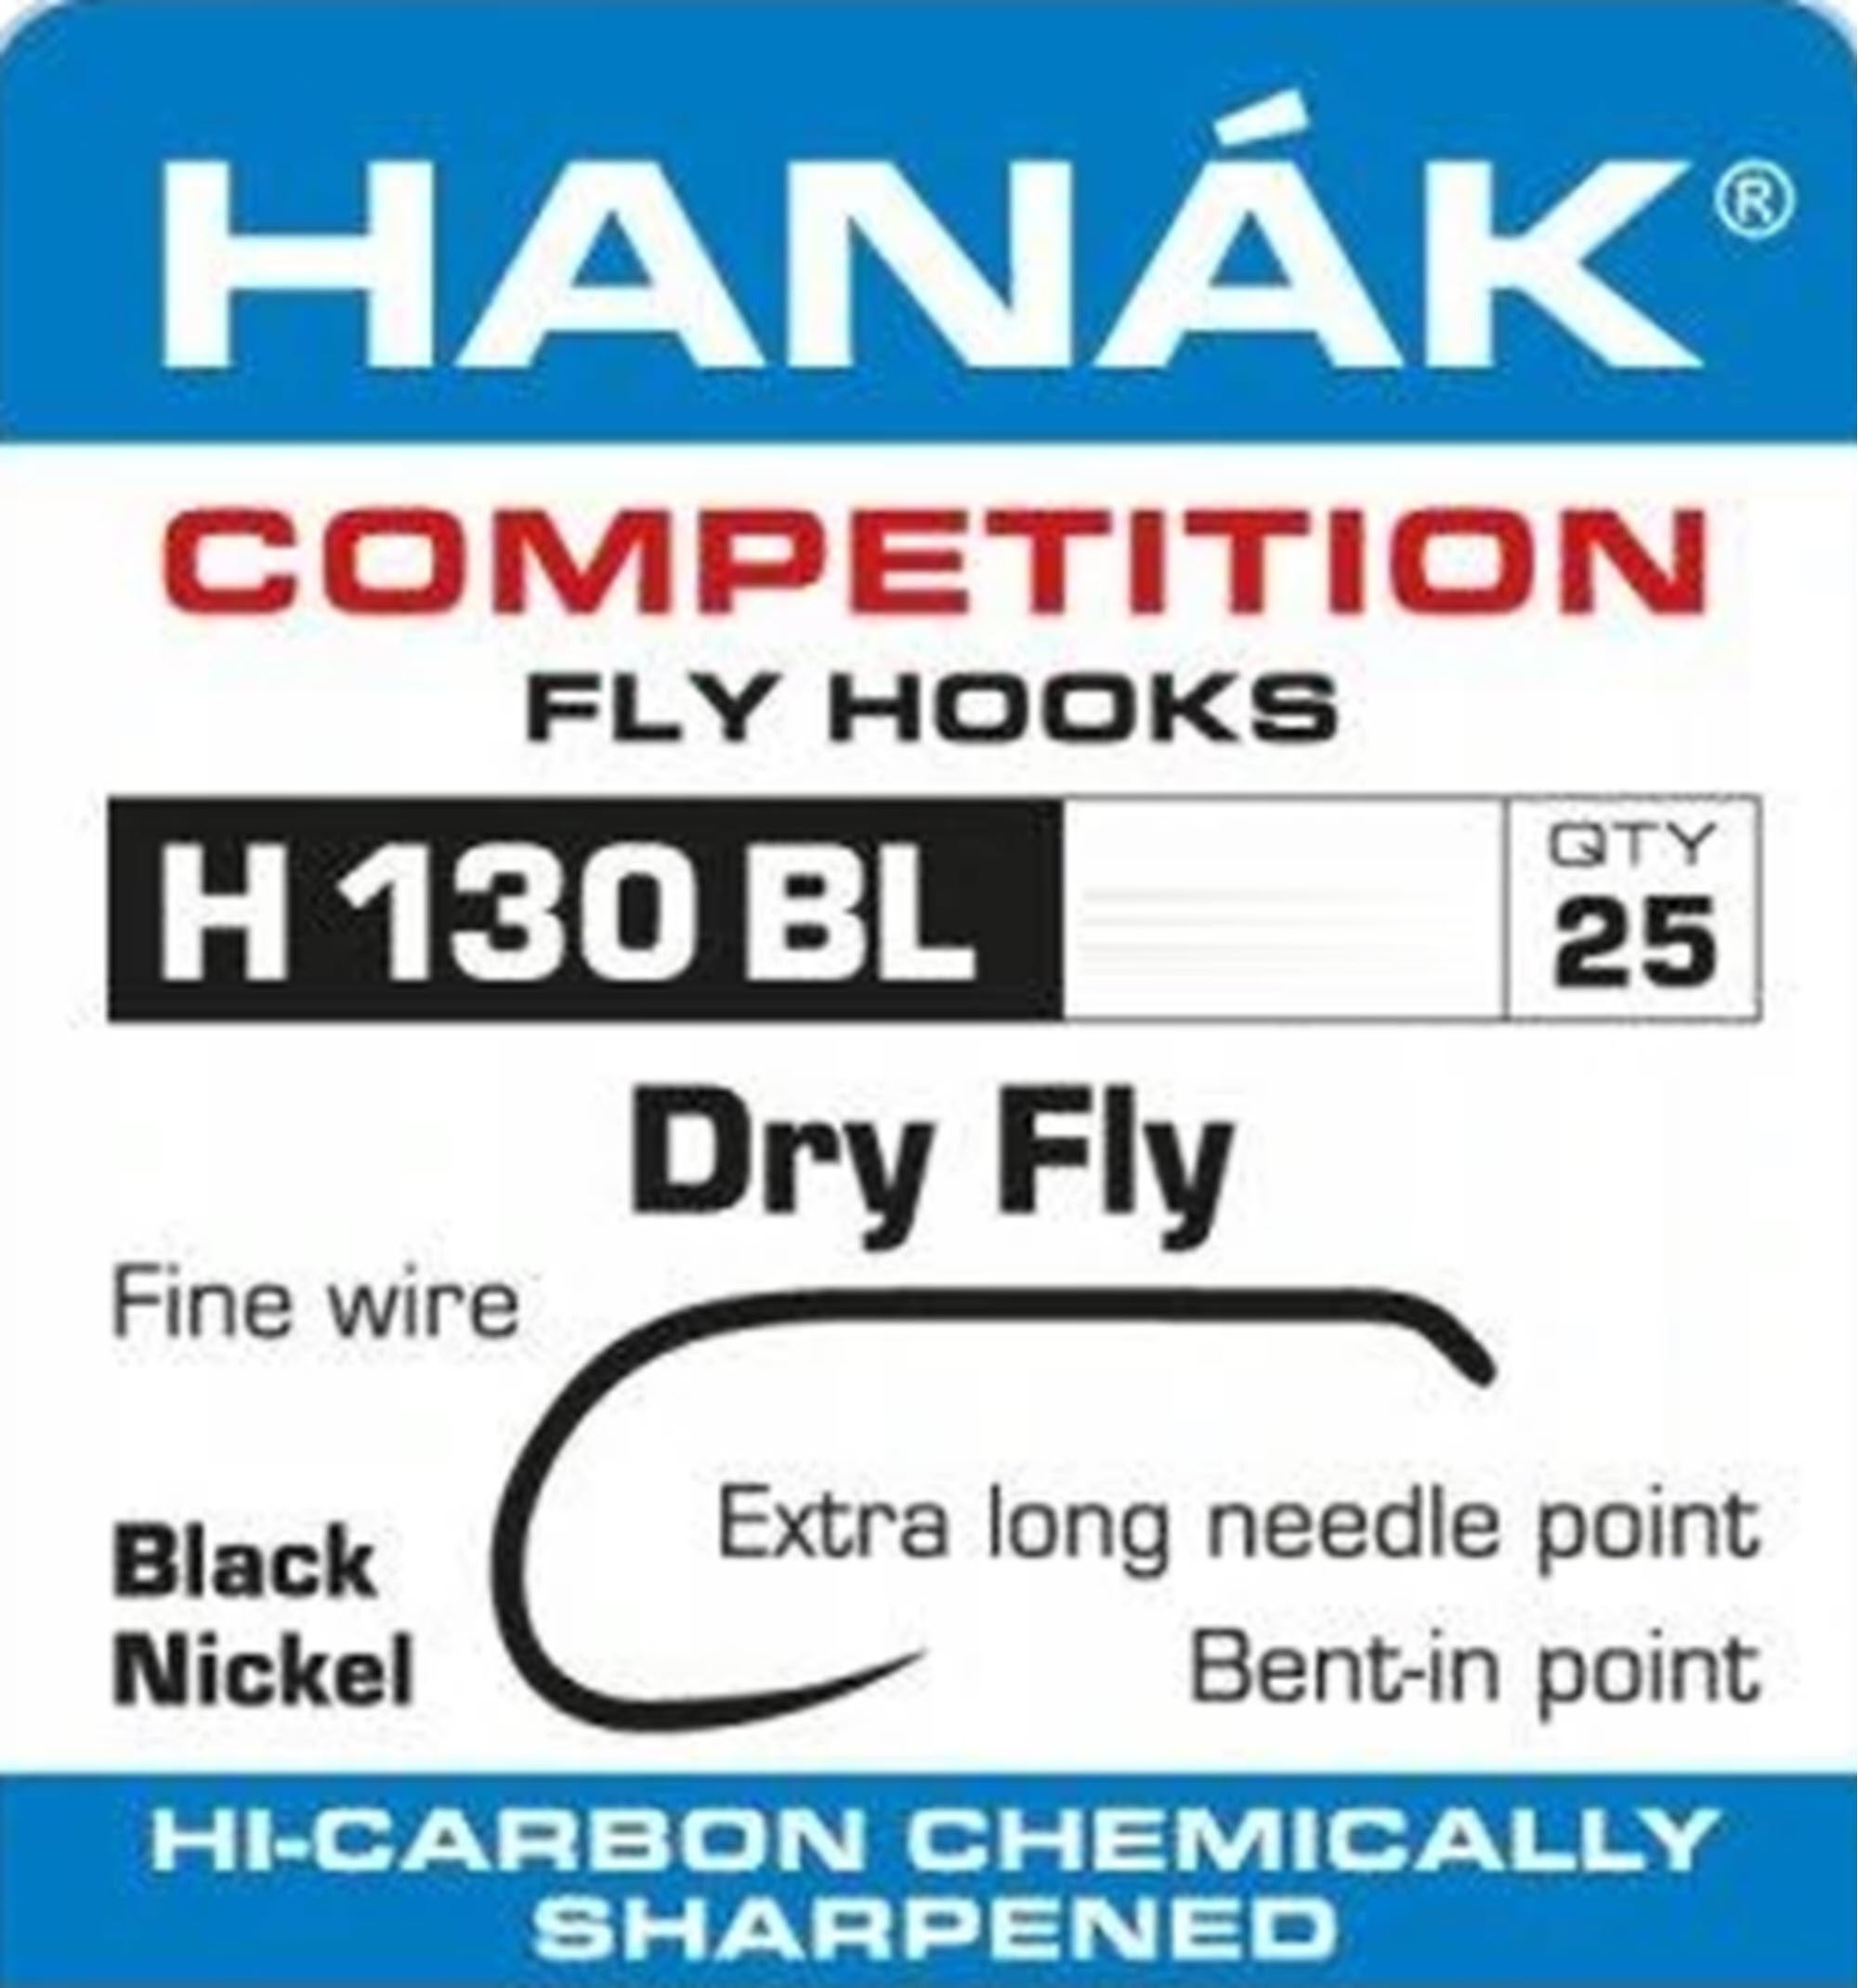 Hanak H 130 Bl Dry Fly Hook 20